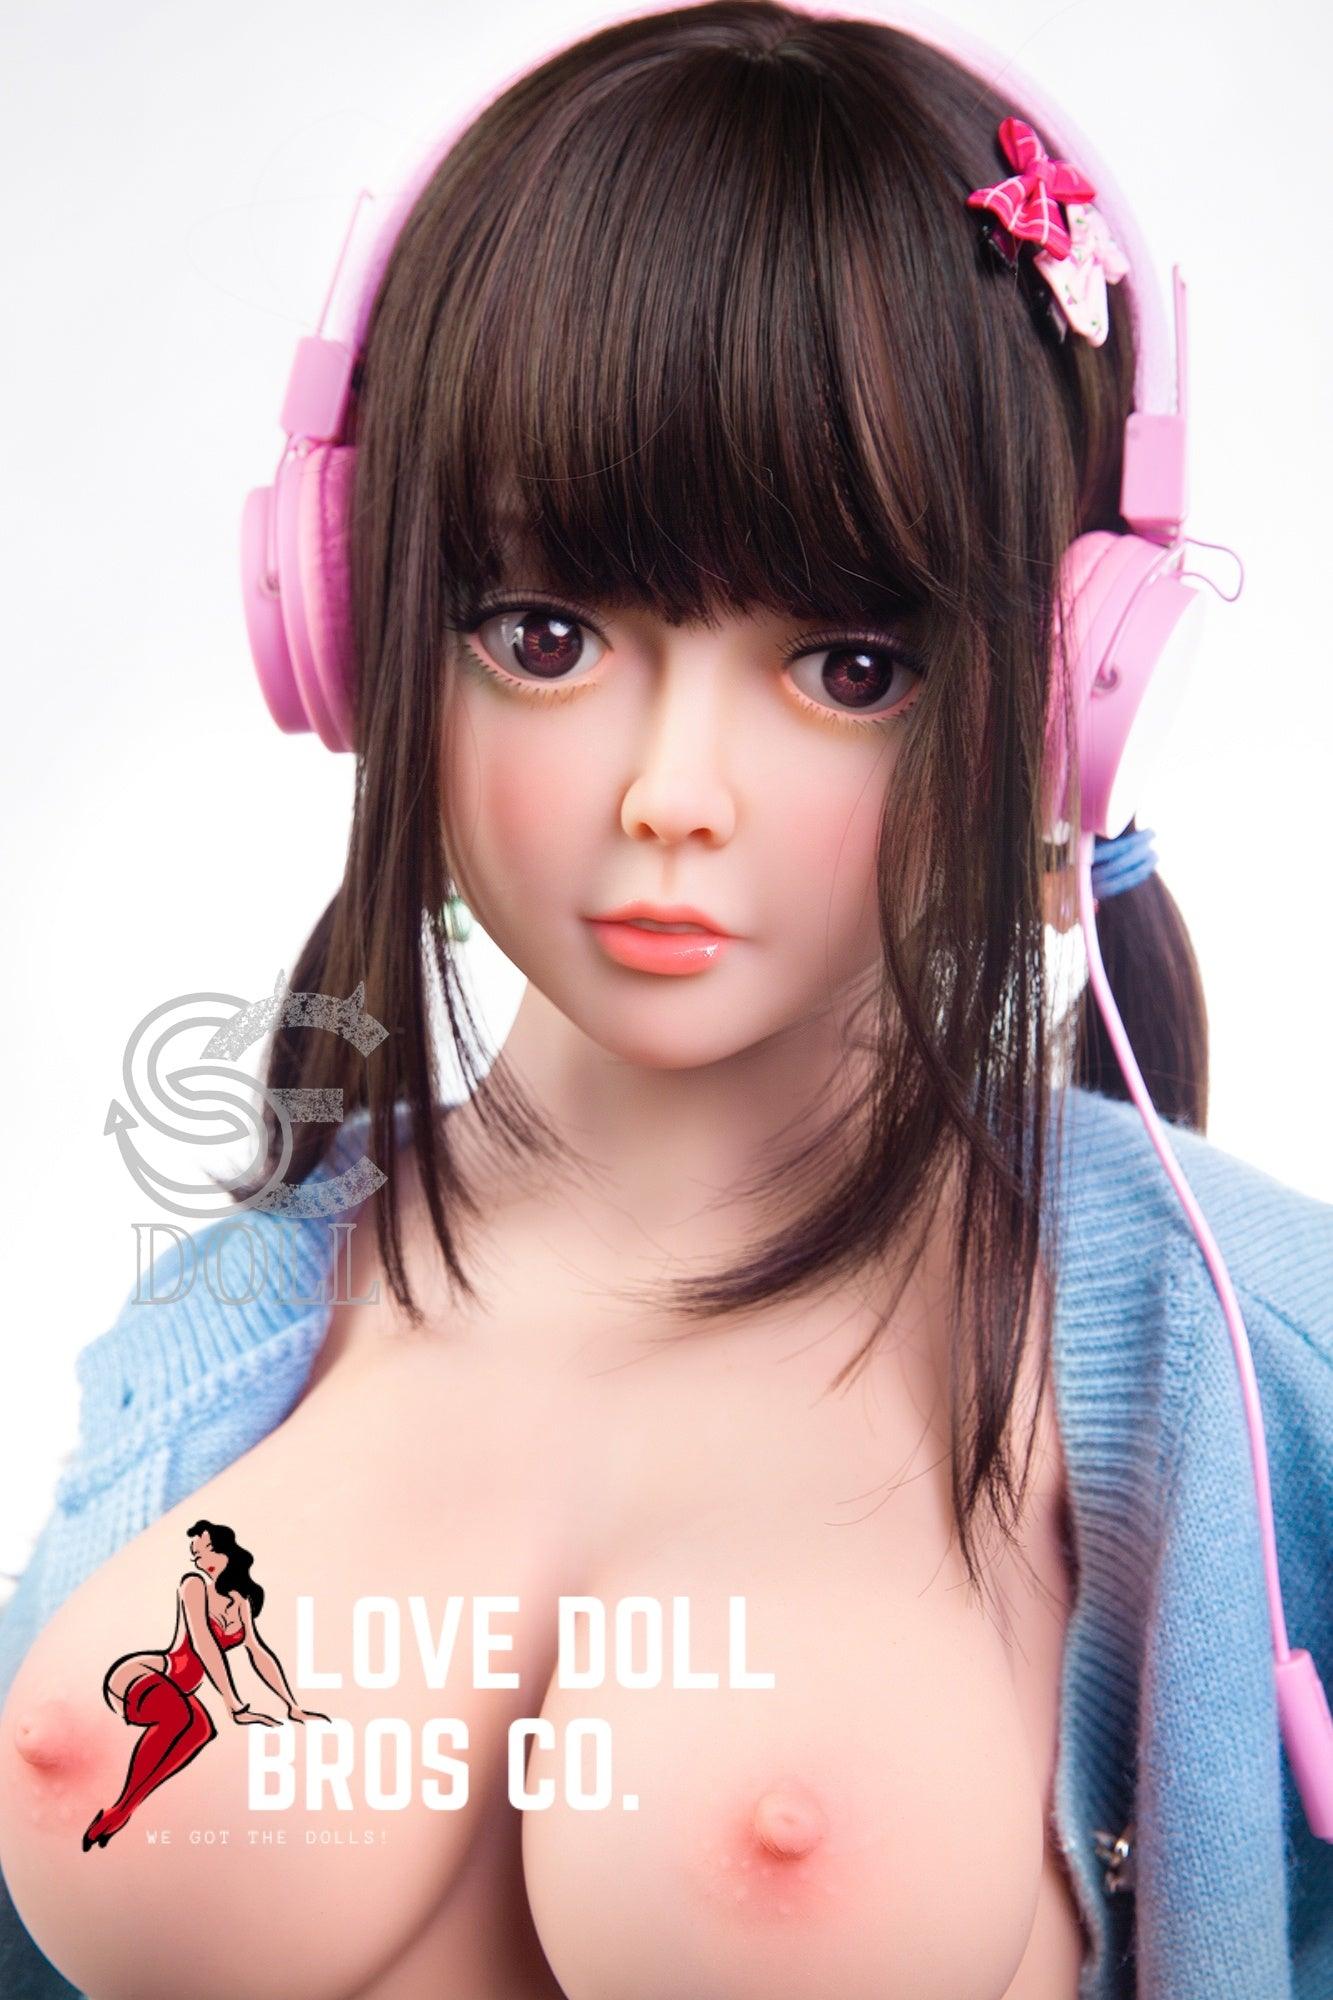 CHARLIE 156CM - Love Doll Bros Co.